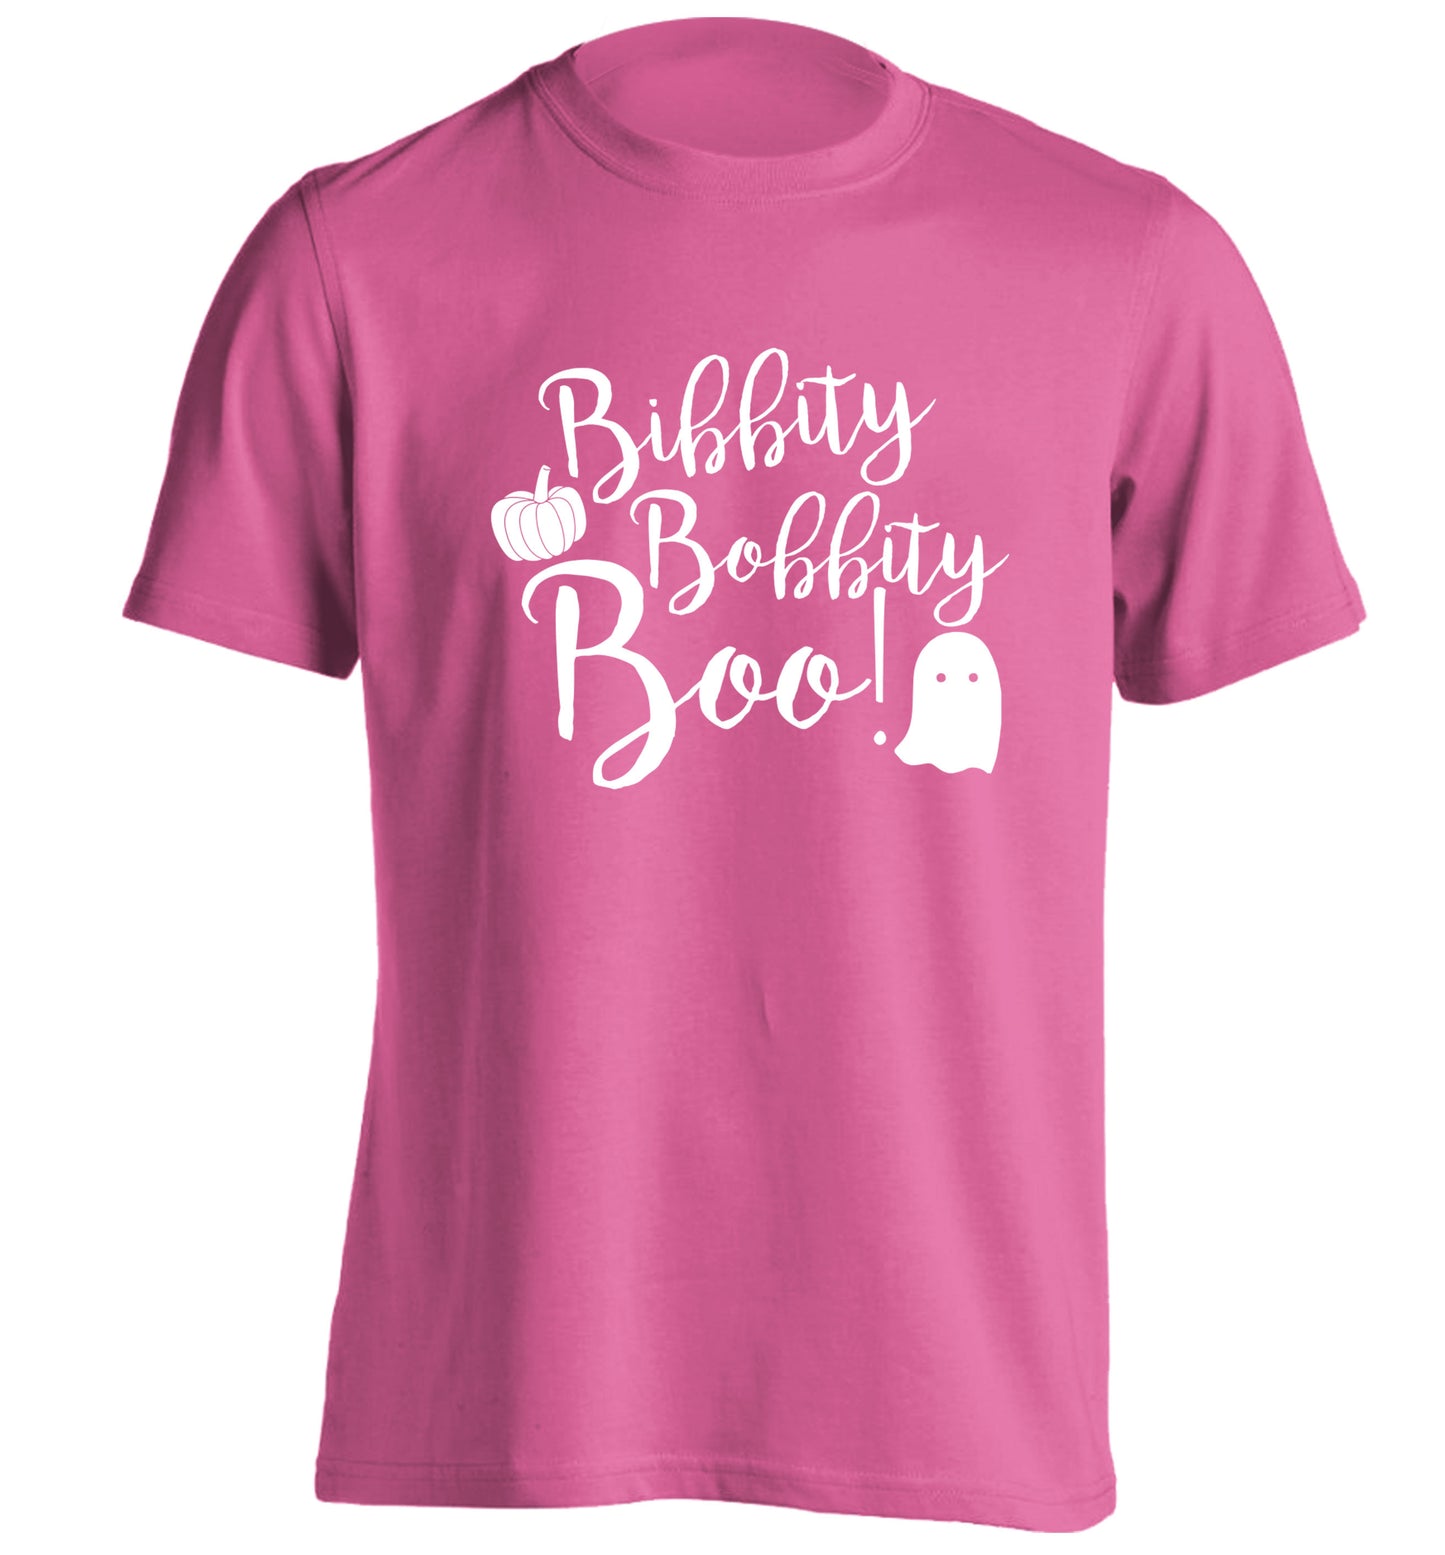 Bibbity bobbity boo! adults unisex pink Tshirt 2XL